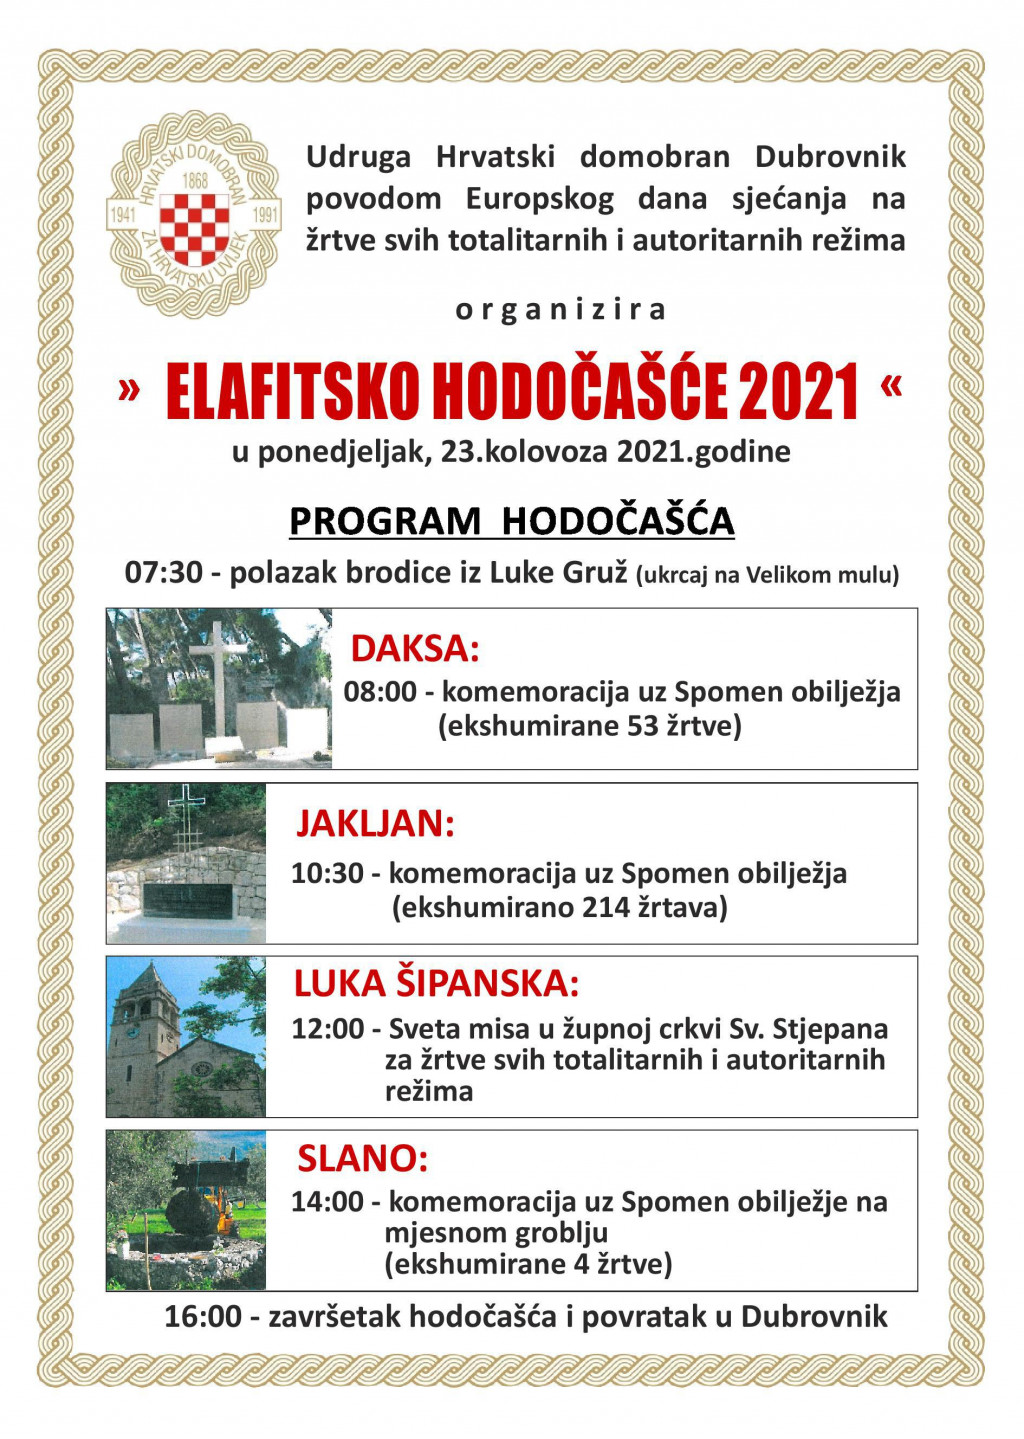 Udruga Hrvatski domobran Dubrovnik organizira Elafitsko hodočašće